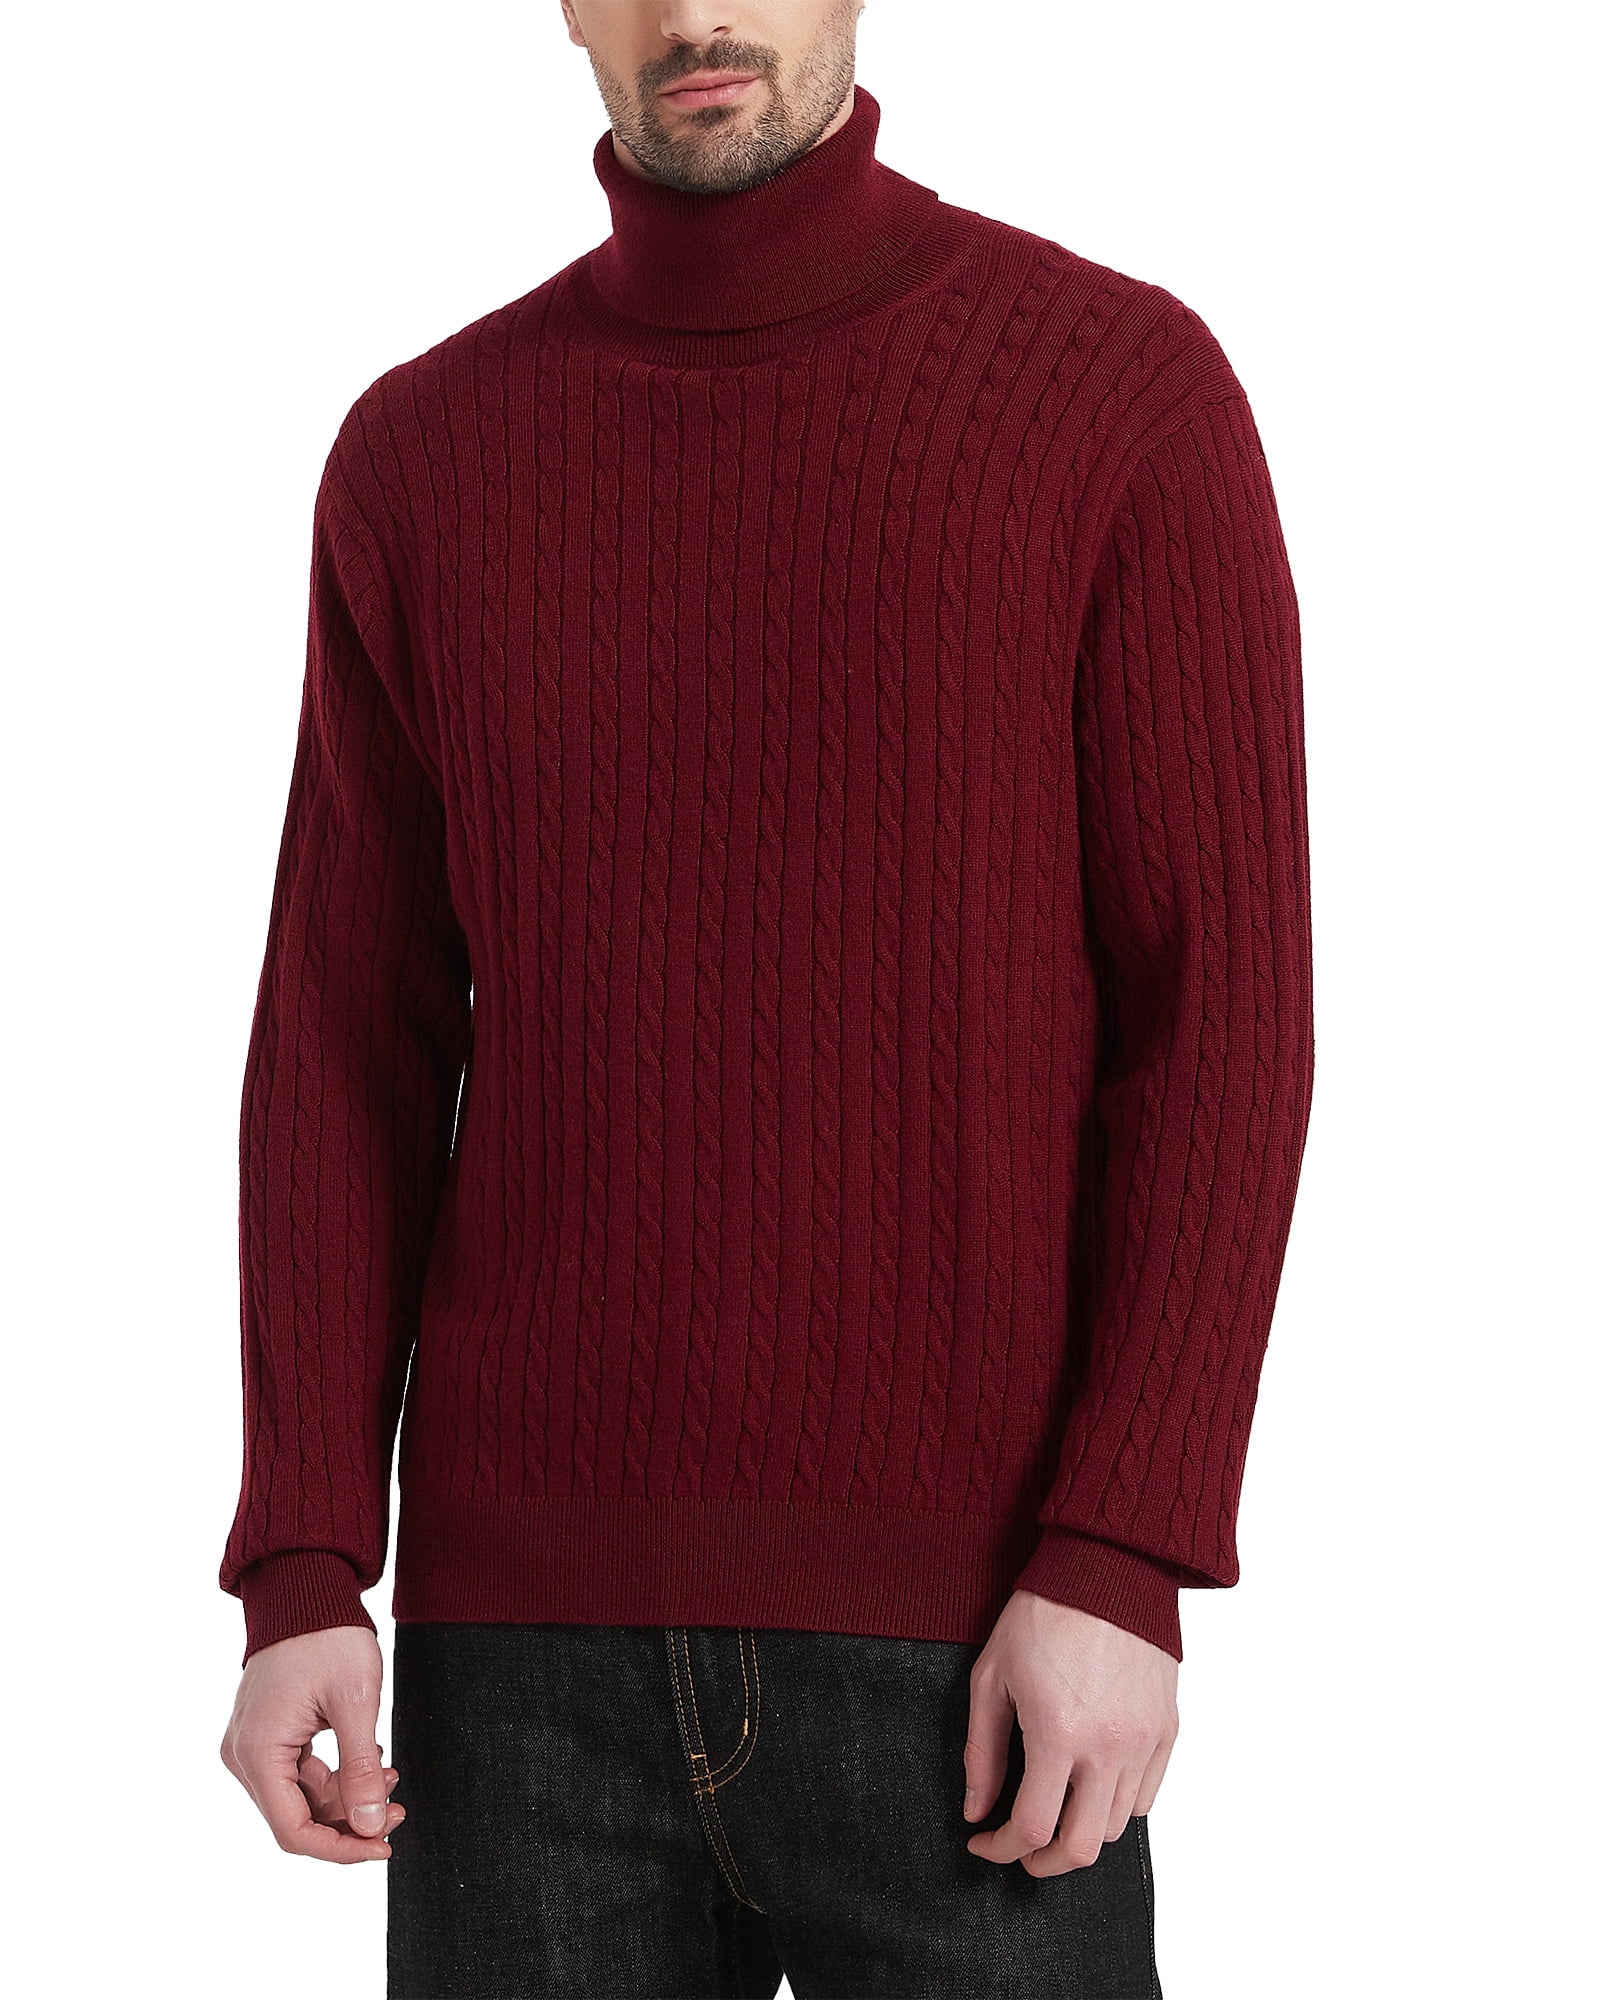 Kallspin Men's Turtleneck Sweaters Wool Blend High Neck Pullover ...